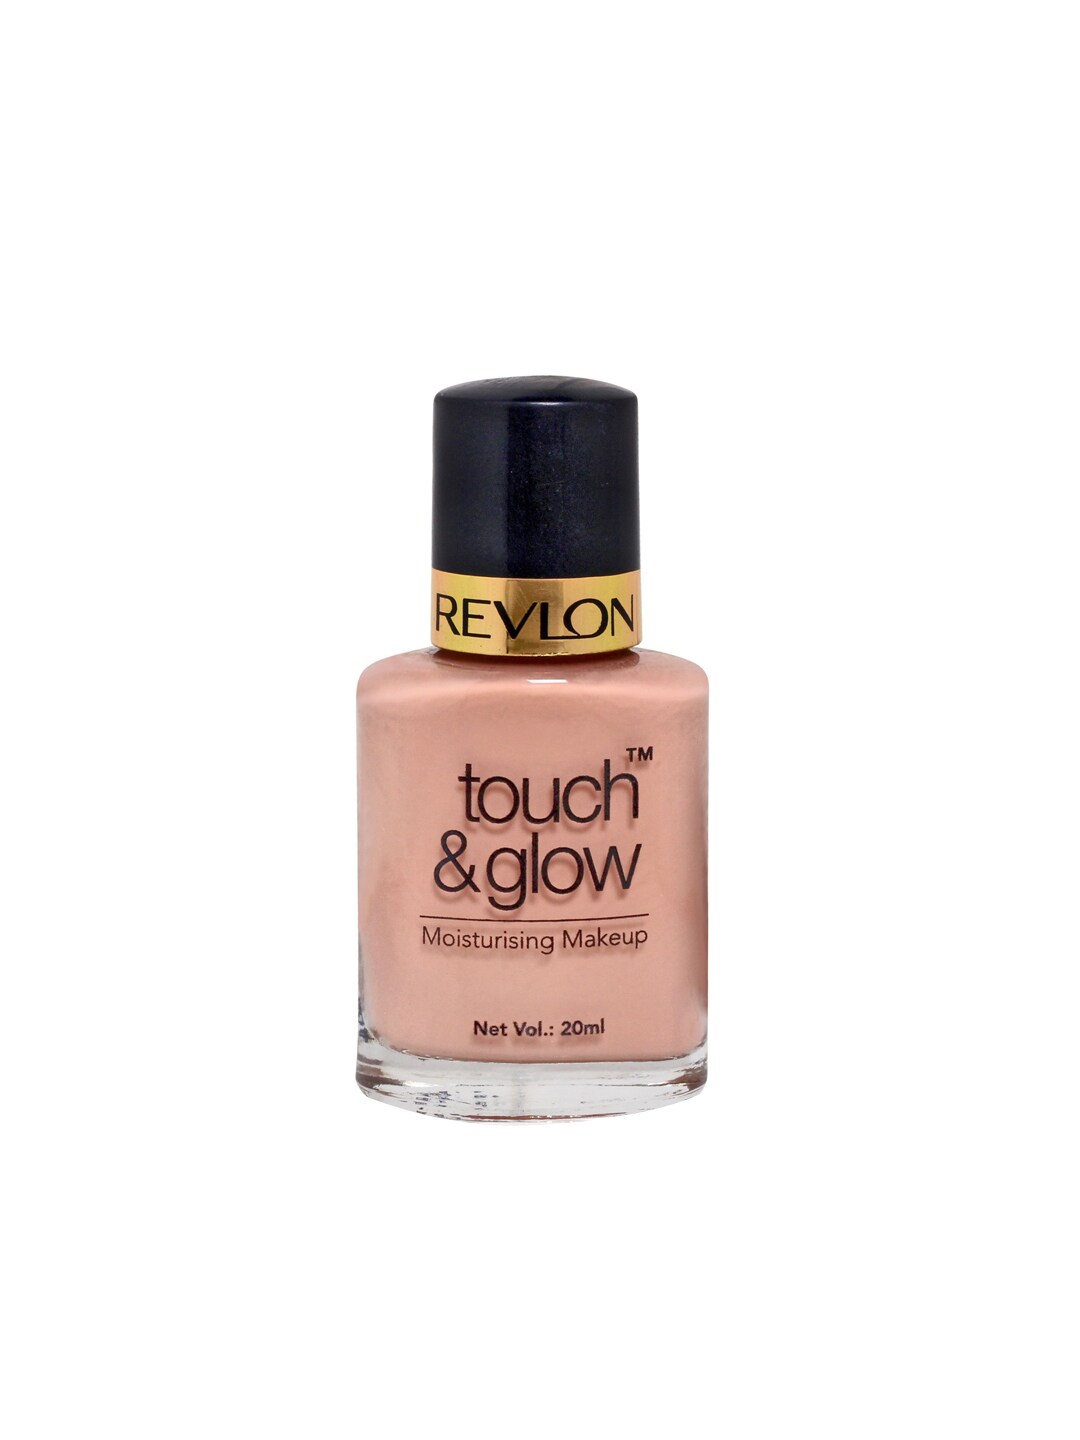 Revlon Touch & Glow Moisturising Makeup Rose Mist